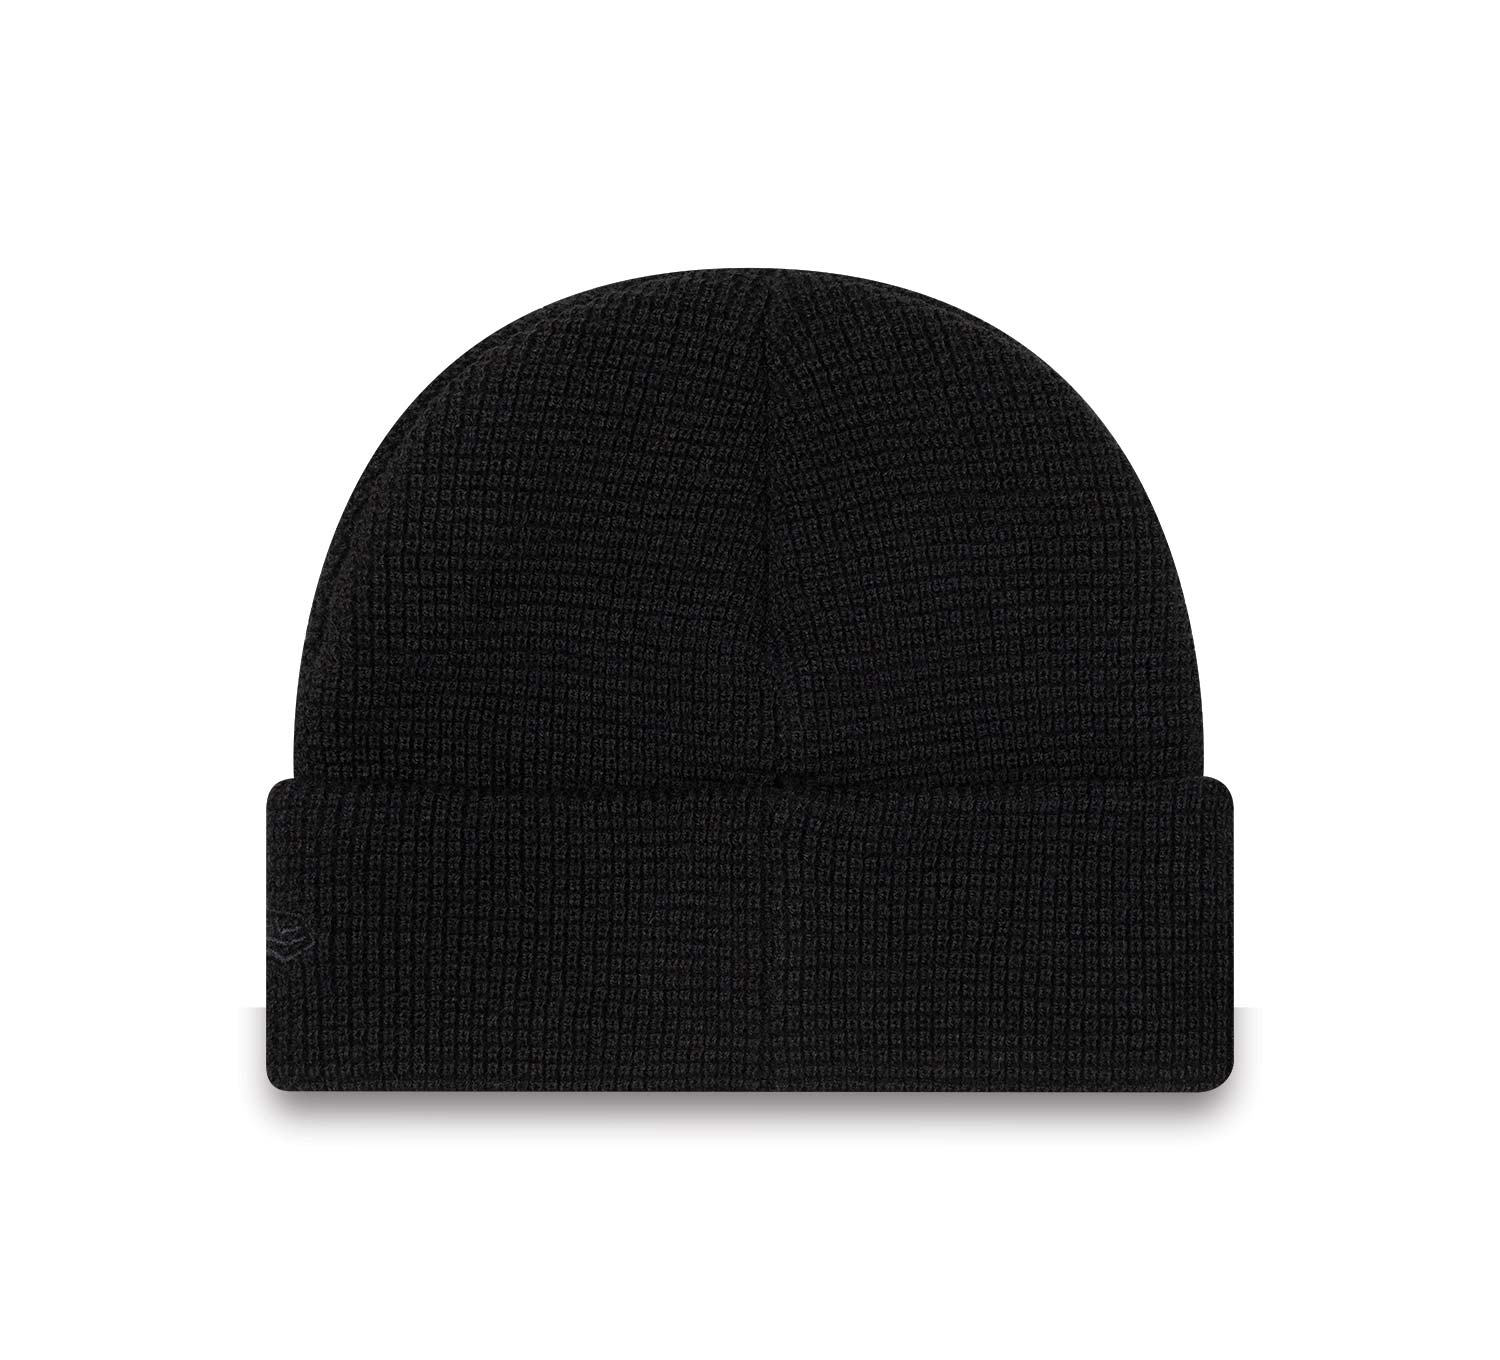 New Era Polyana Patch Short Cuff Black Beanie Hat